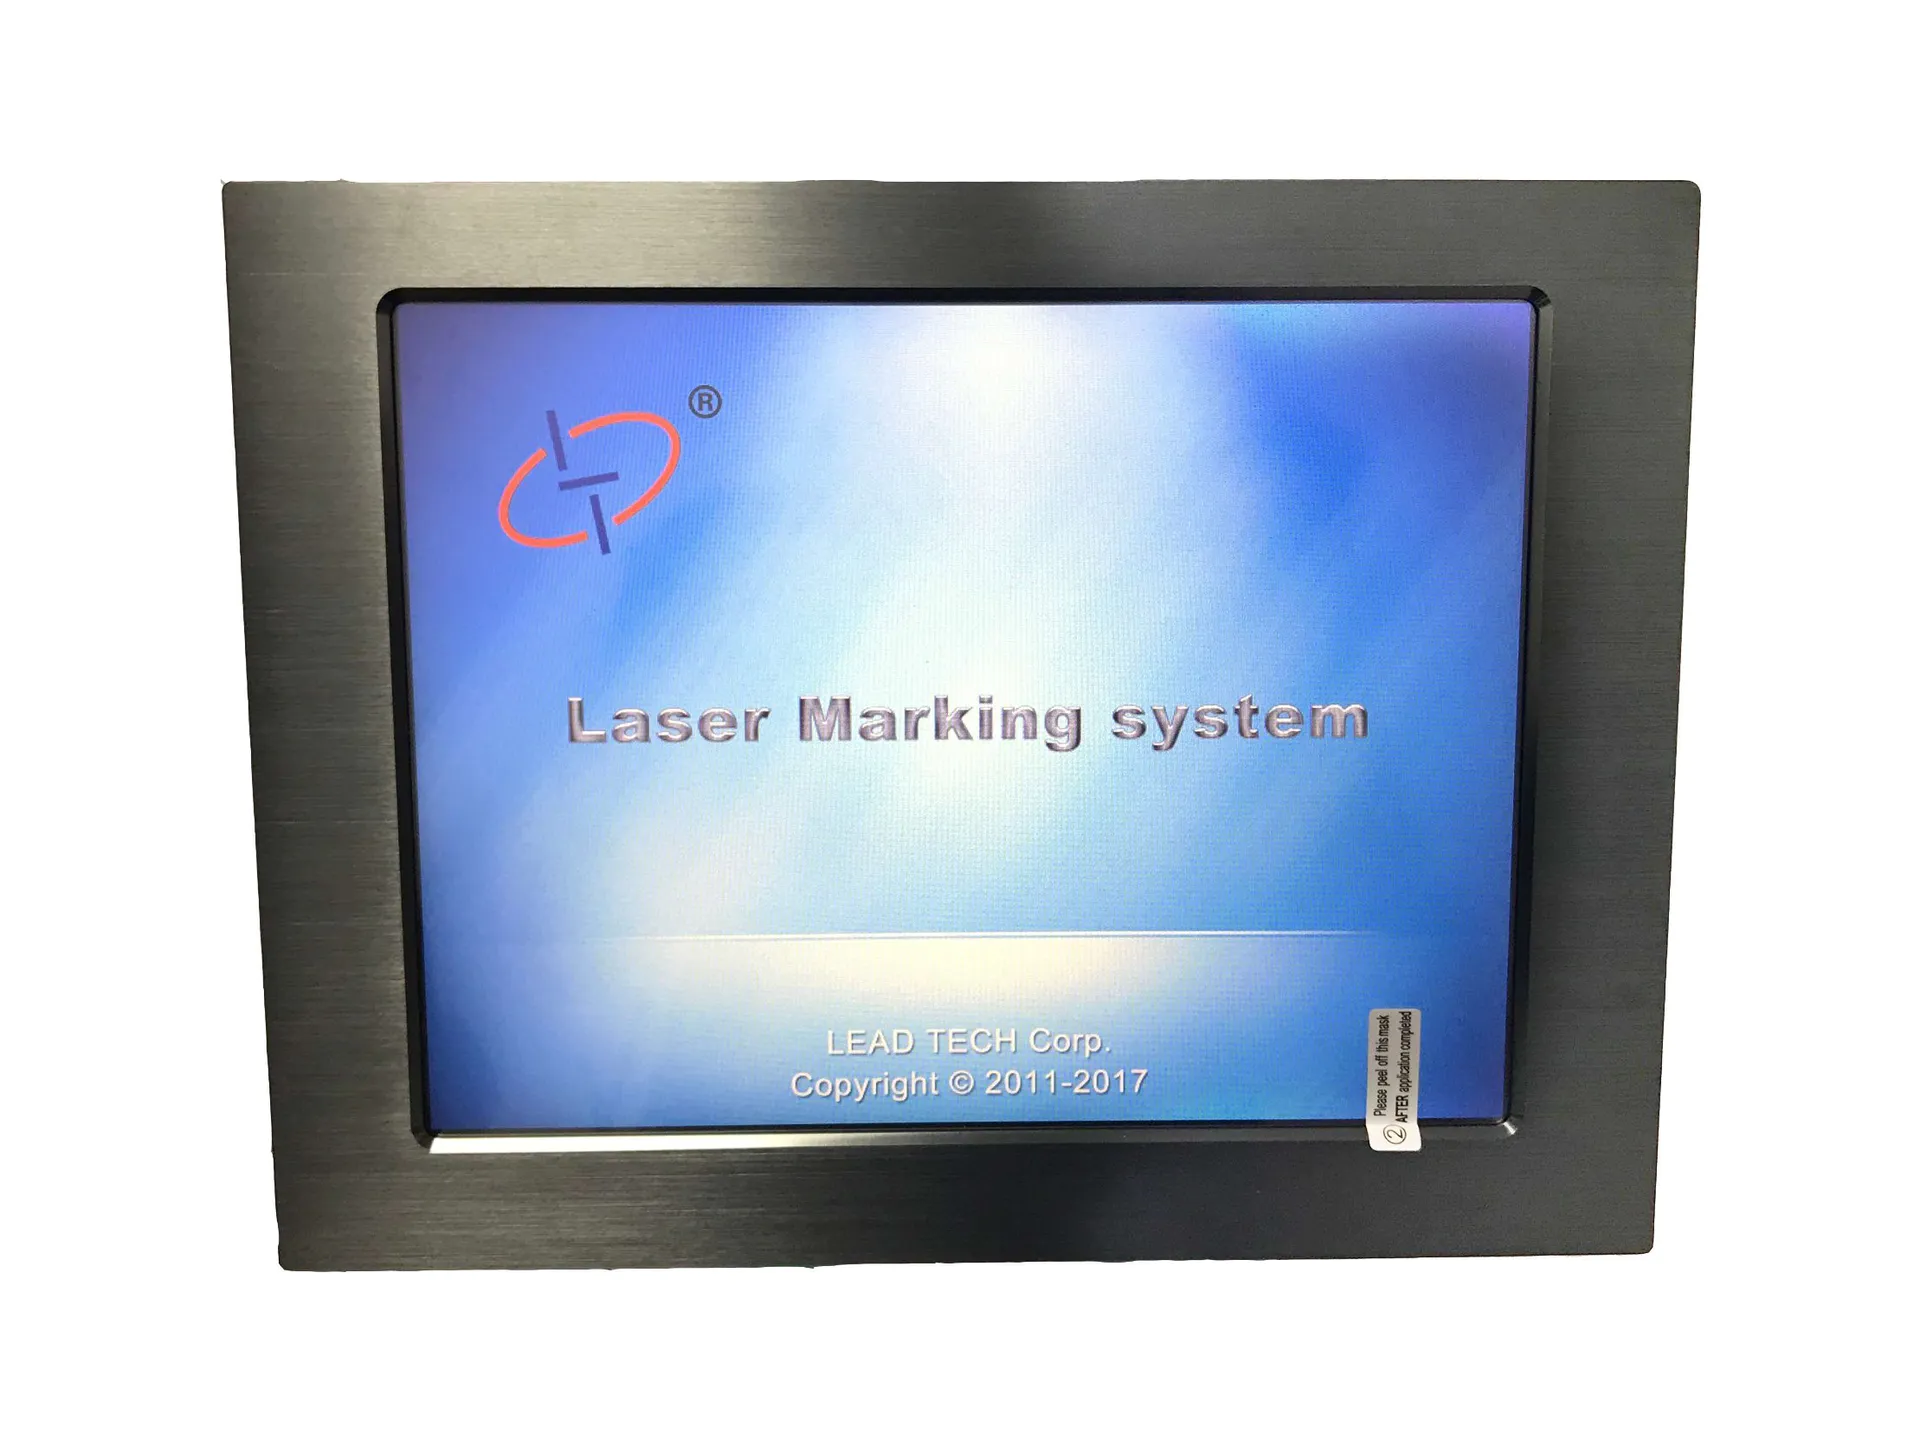 Lt8020c/Lt8030c CO2 High Performance Digital Laser Marking Printer for Plate Silver Gold Printing